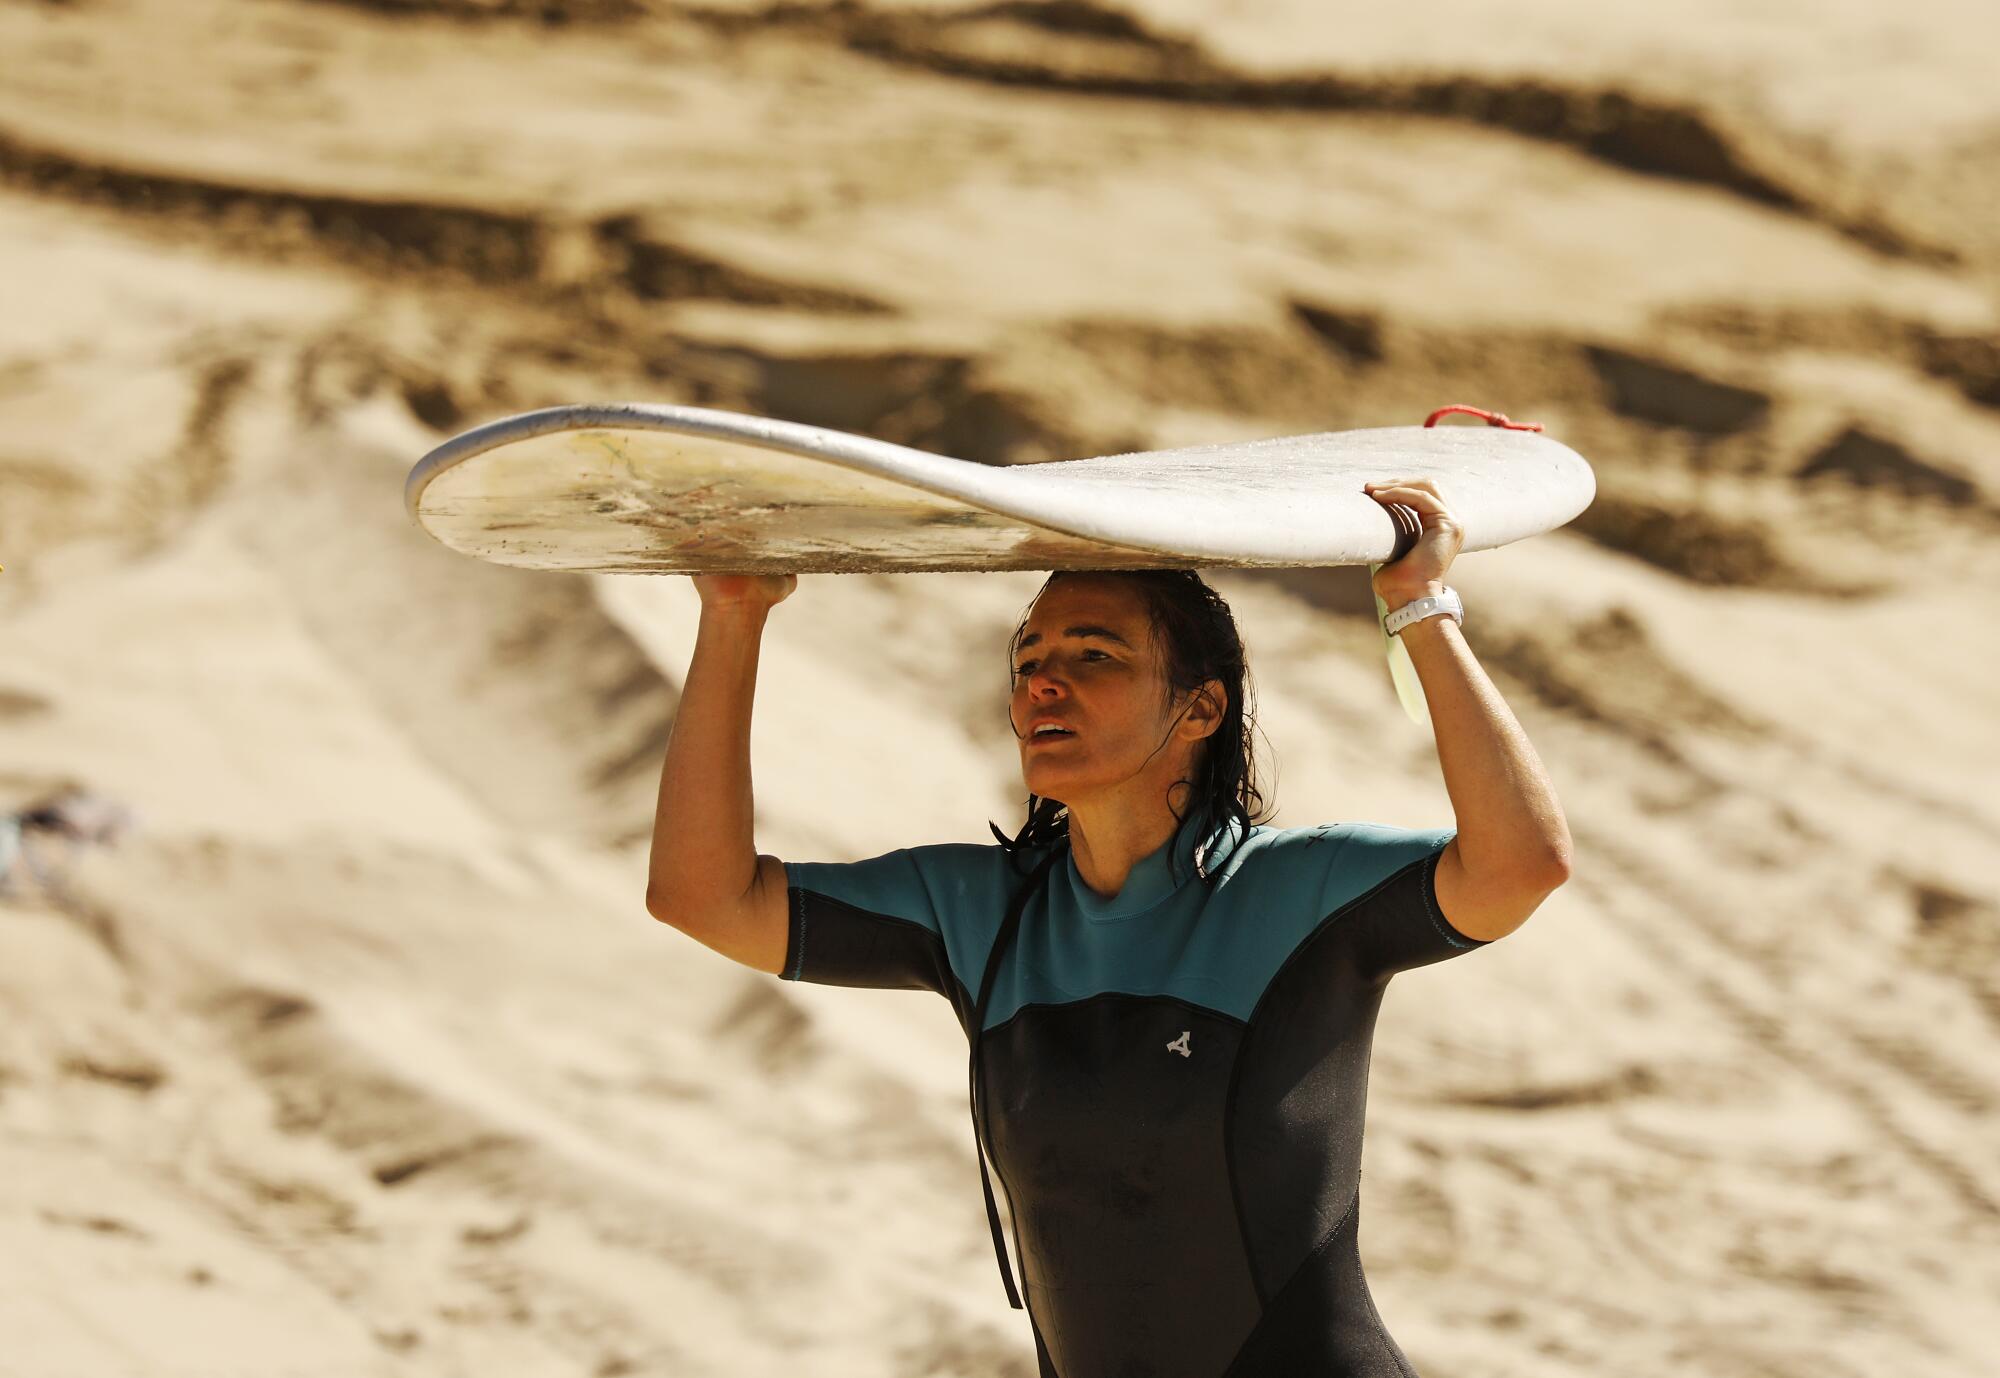  Natalia Folcini carries her surfboard at Surfrider Beach in Malibu.